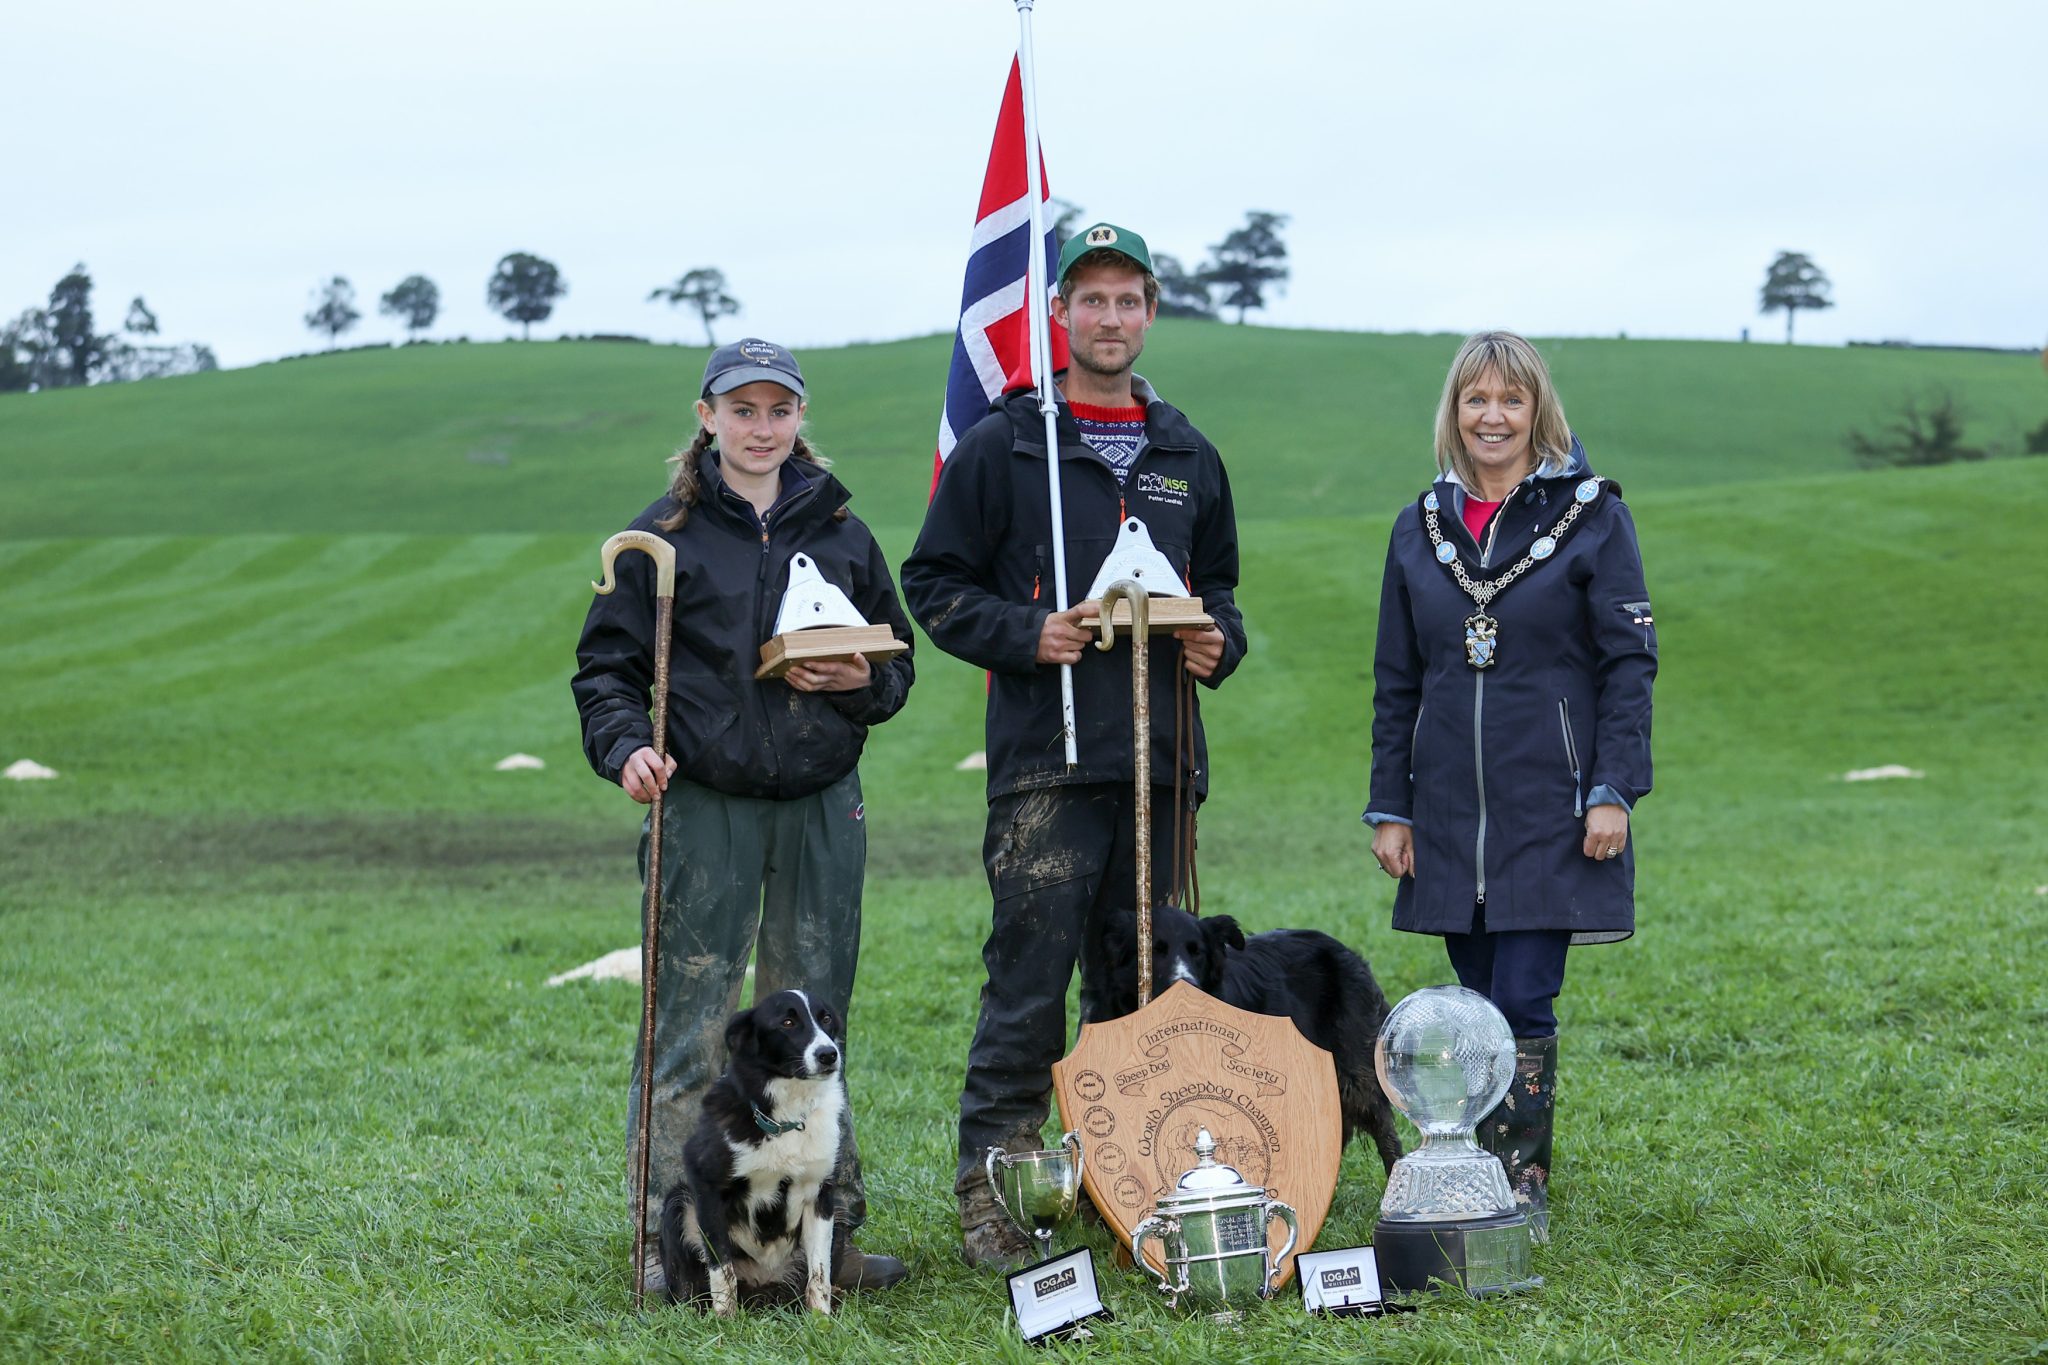 World Sheepdog Champions Praised by Lord Mayor